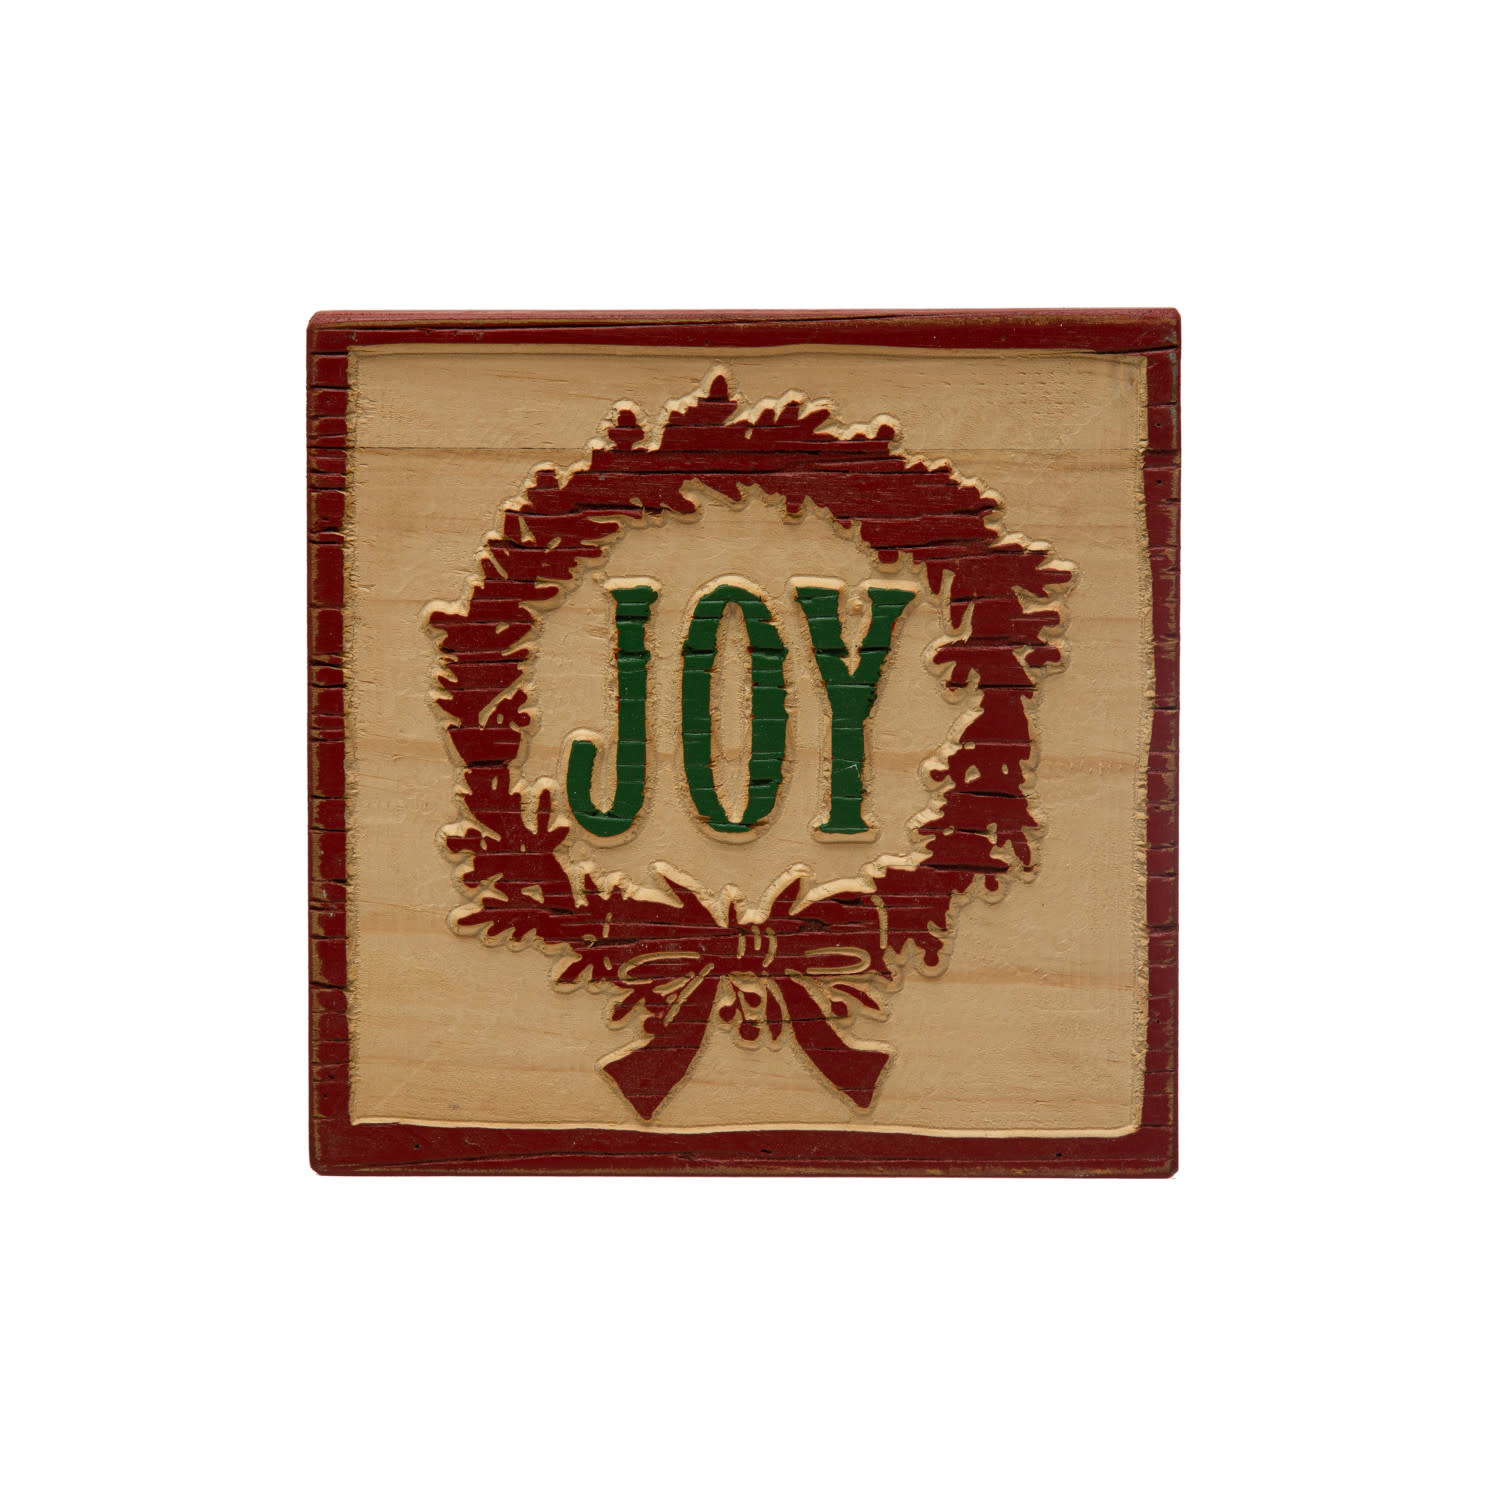 "Joy" Square Engraved Fir Wood & Pine Wood Wall Decor